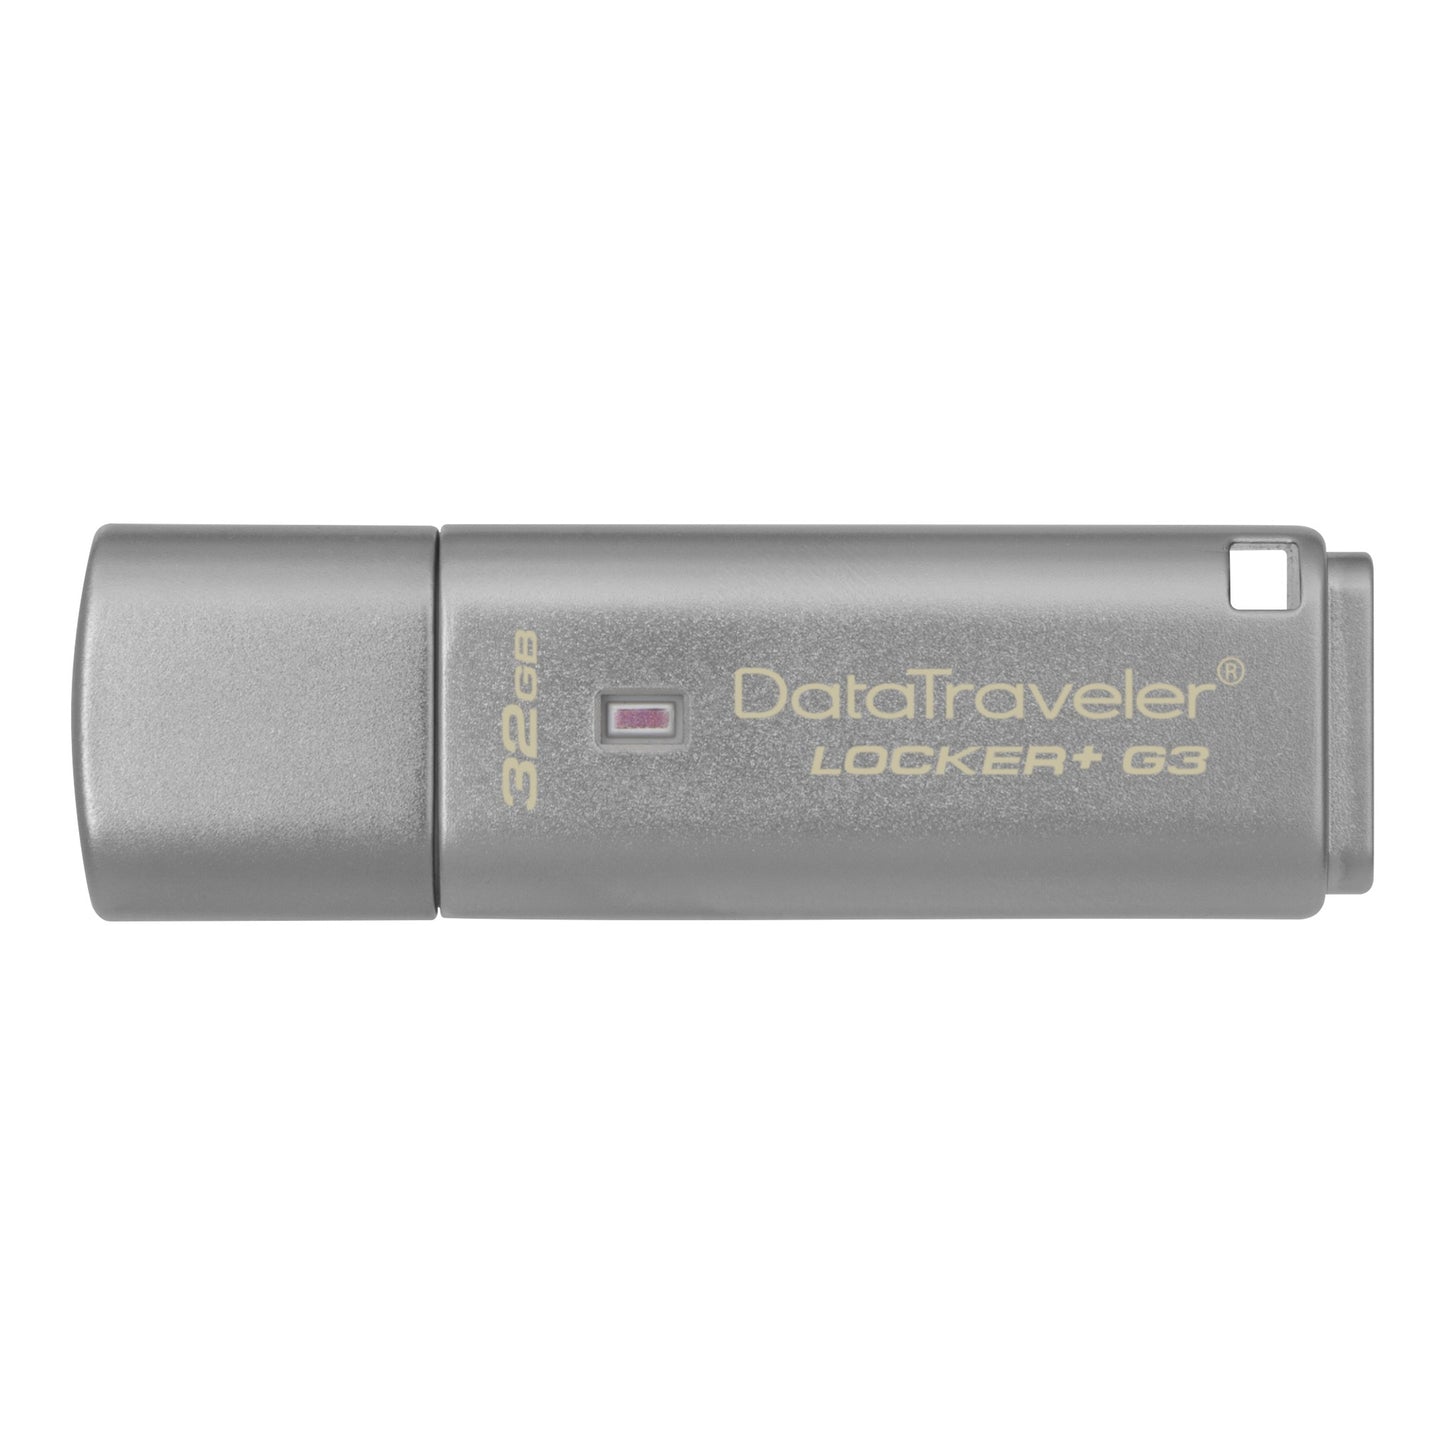 Pendrive Kingston DataTraveler Locker+ G3 32GB USB 3.0